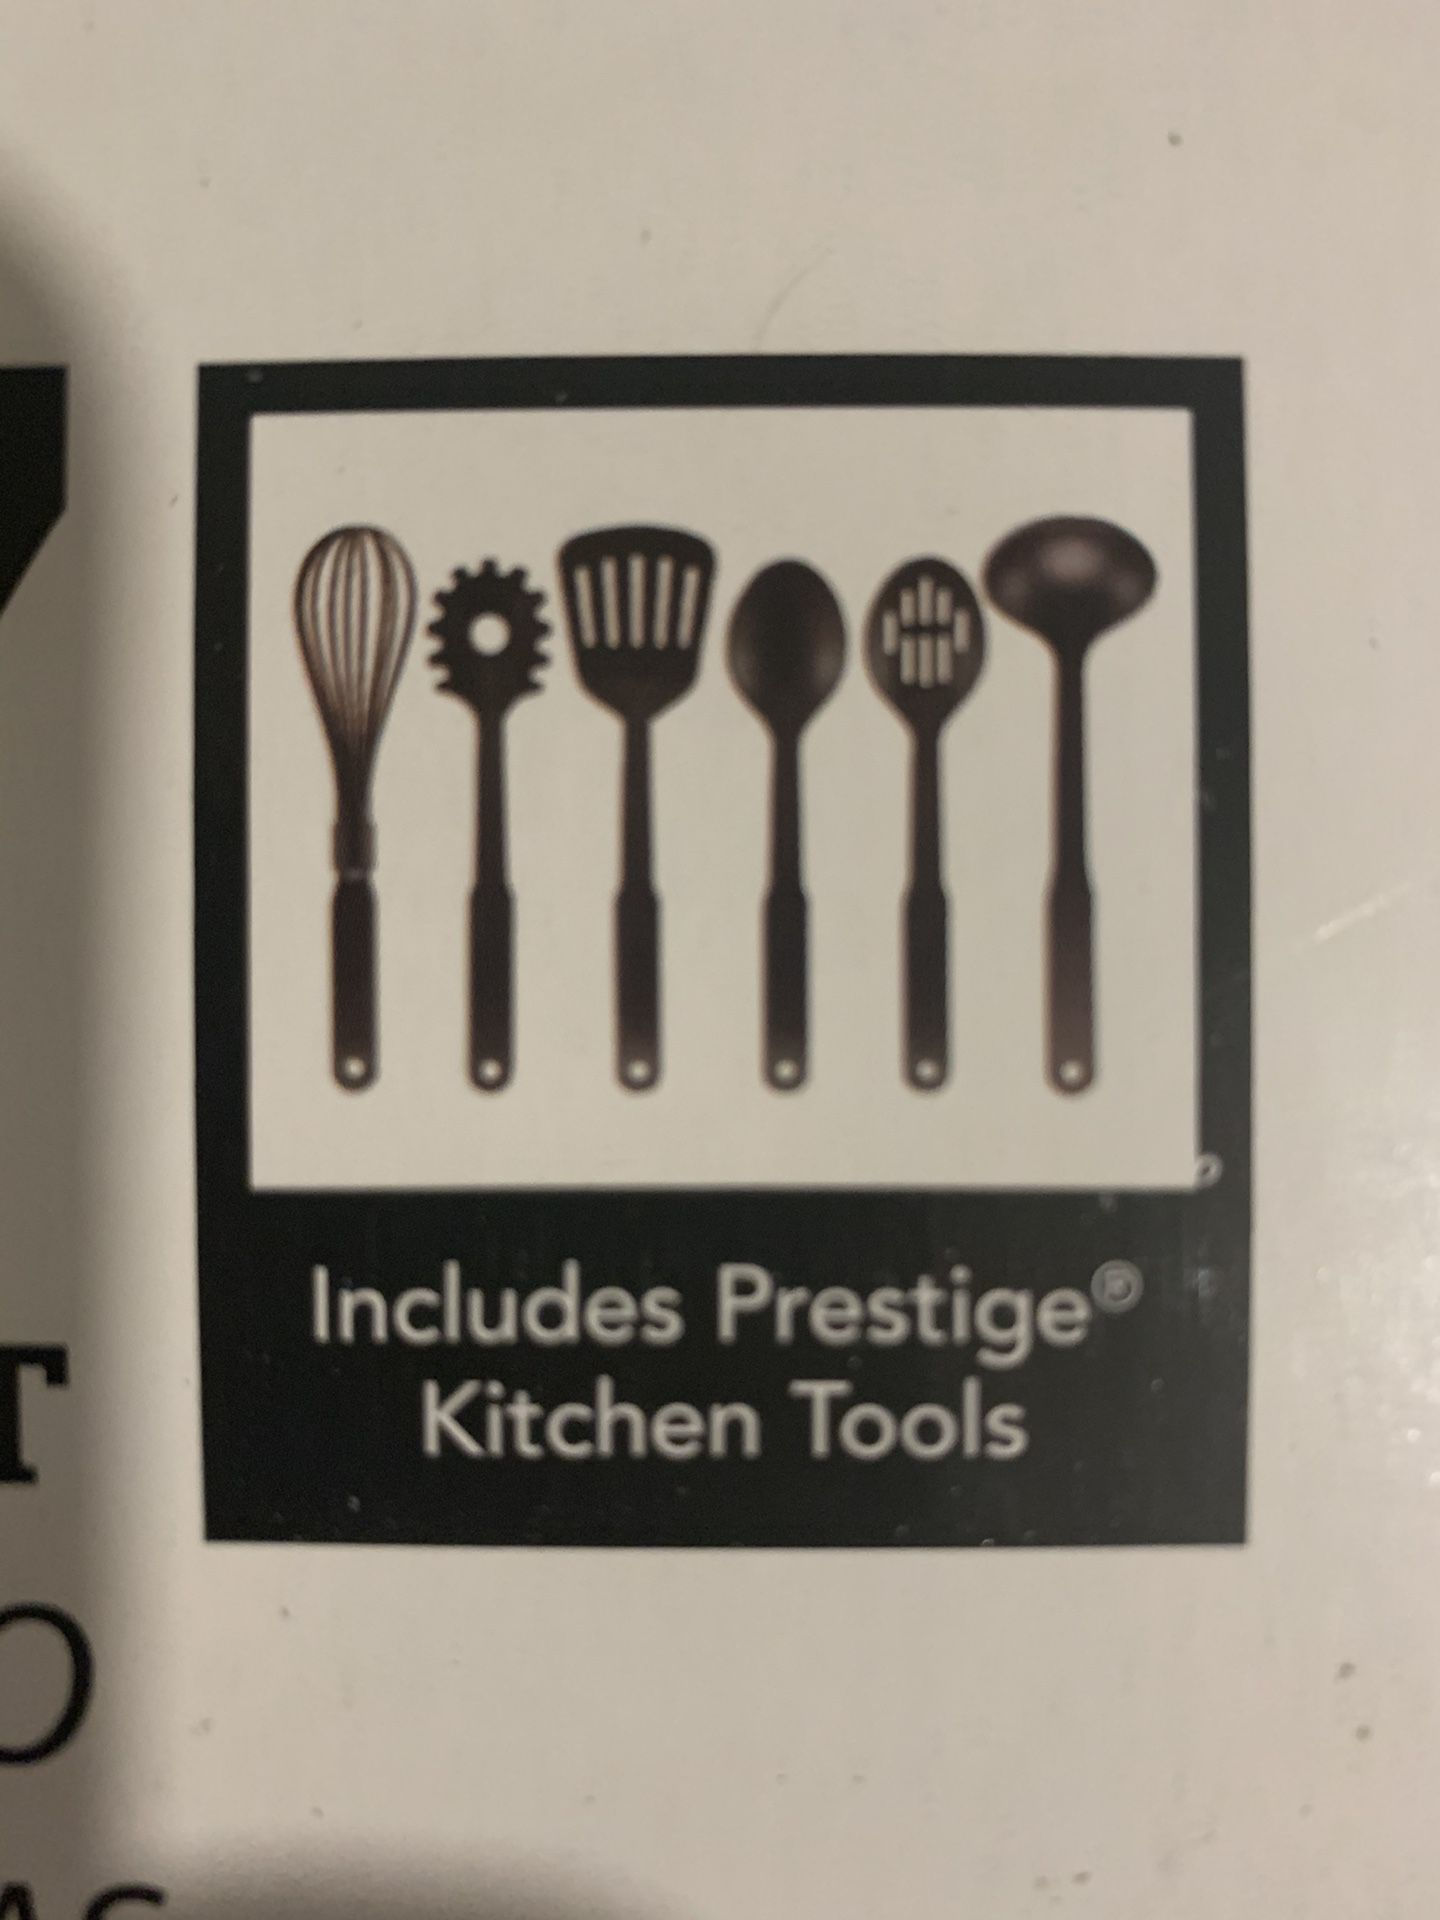 Presuige Kitchen Tools